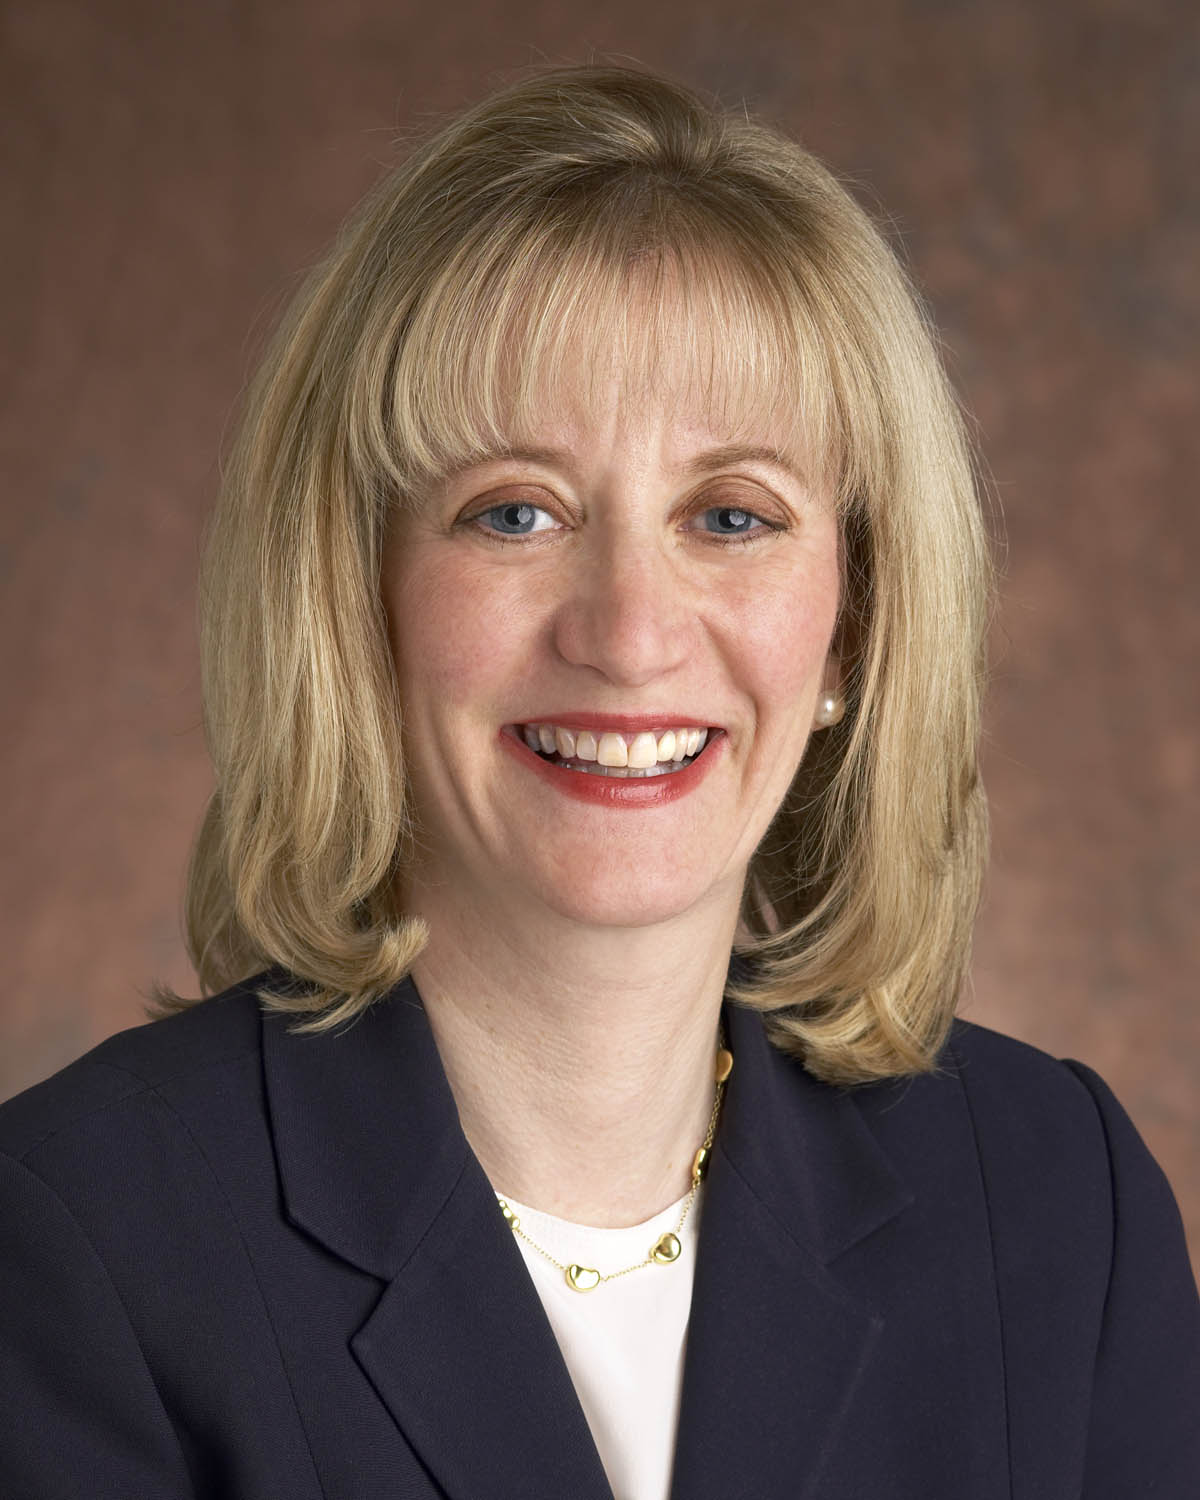 Lori G. Levin, Attorney at Law